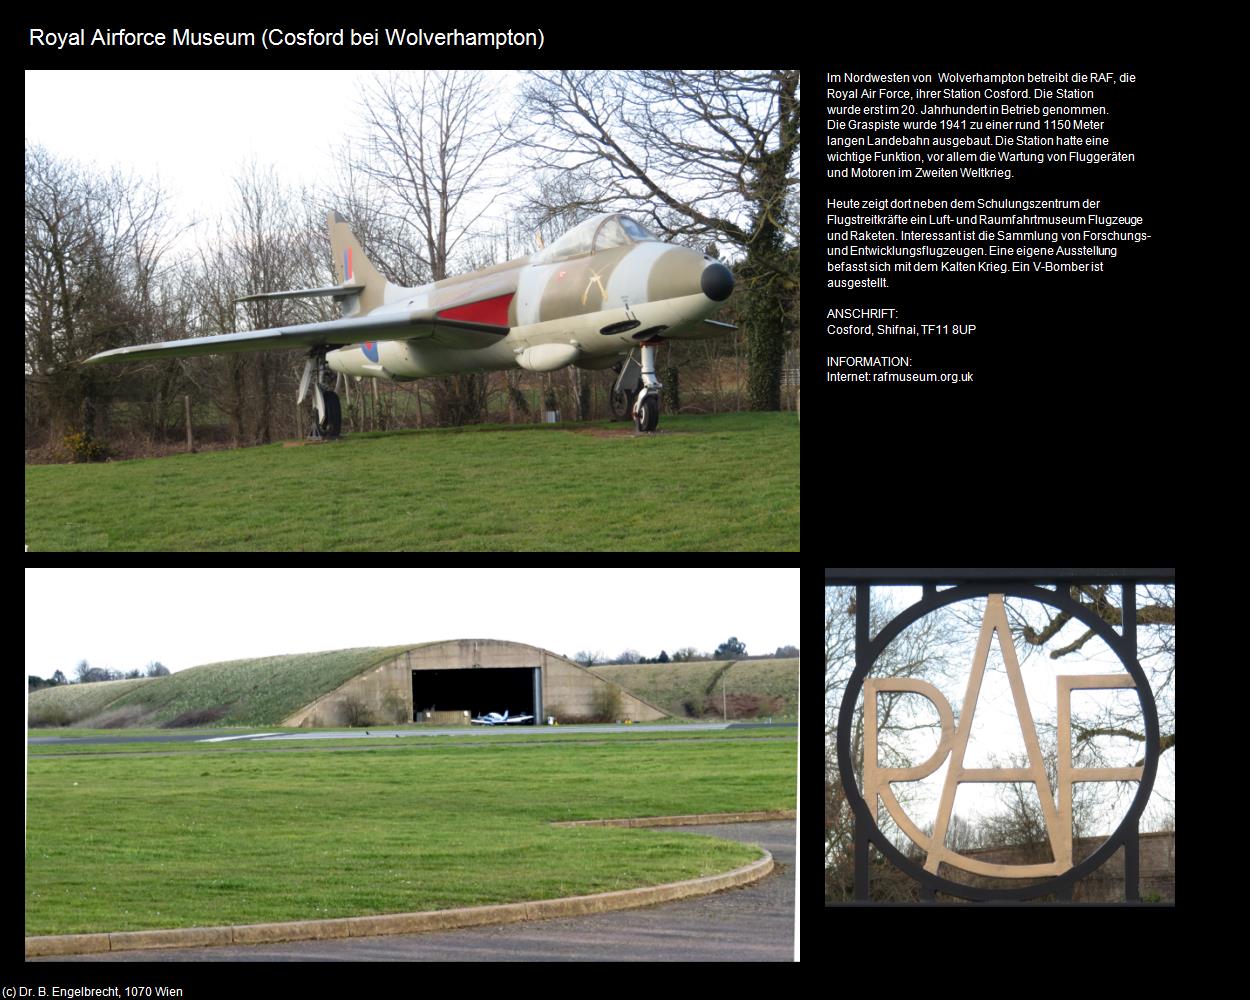 Royal Airforce Museum  (Cosford bei Wolverhampton, England) in Kulturatlas-ENGLAND und WALES